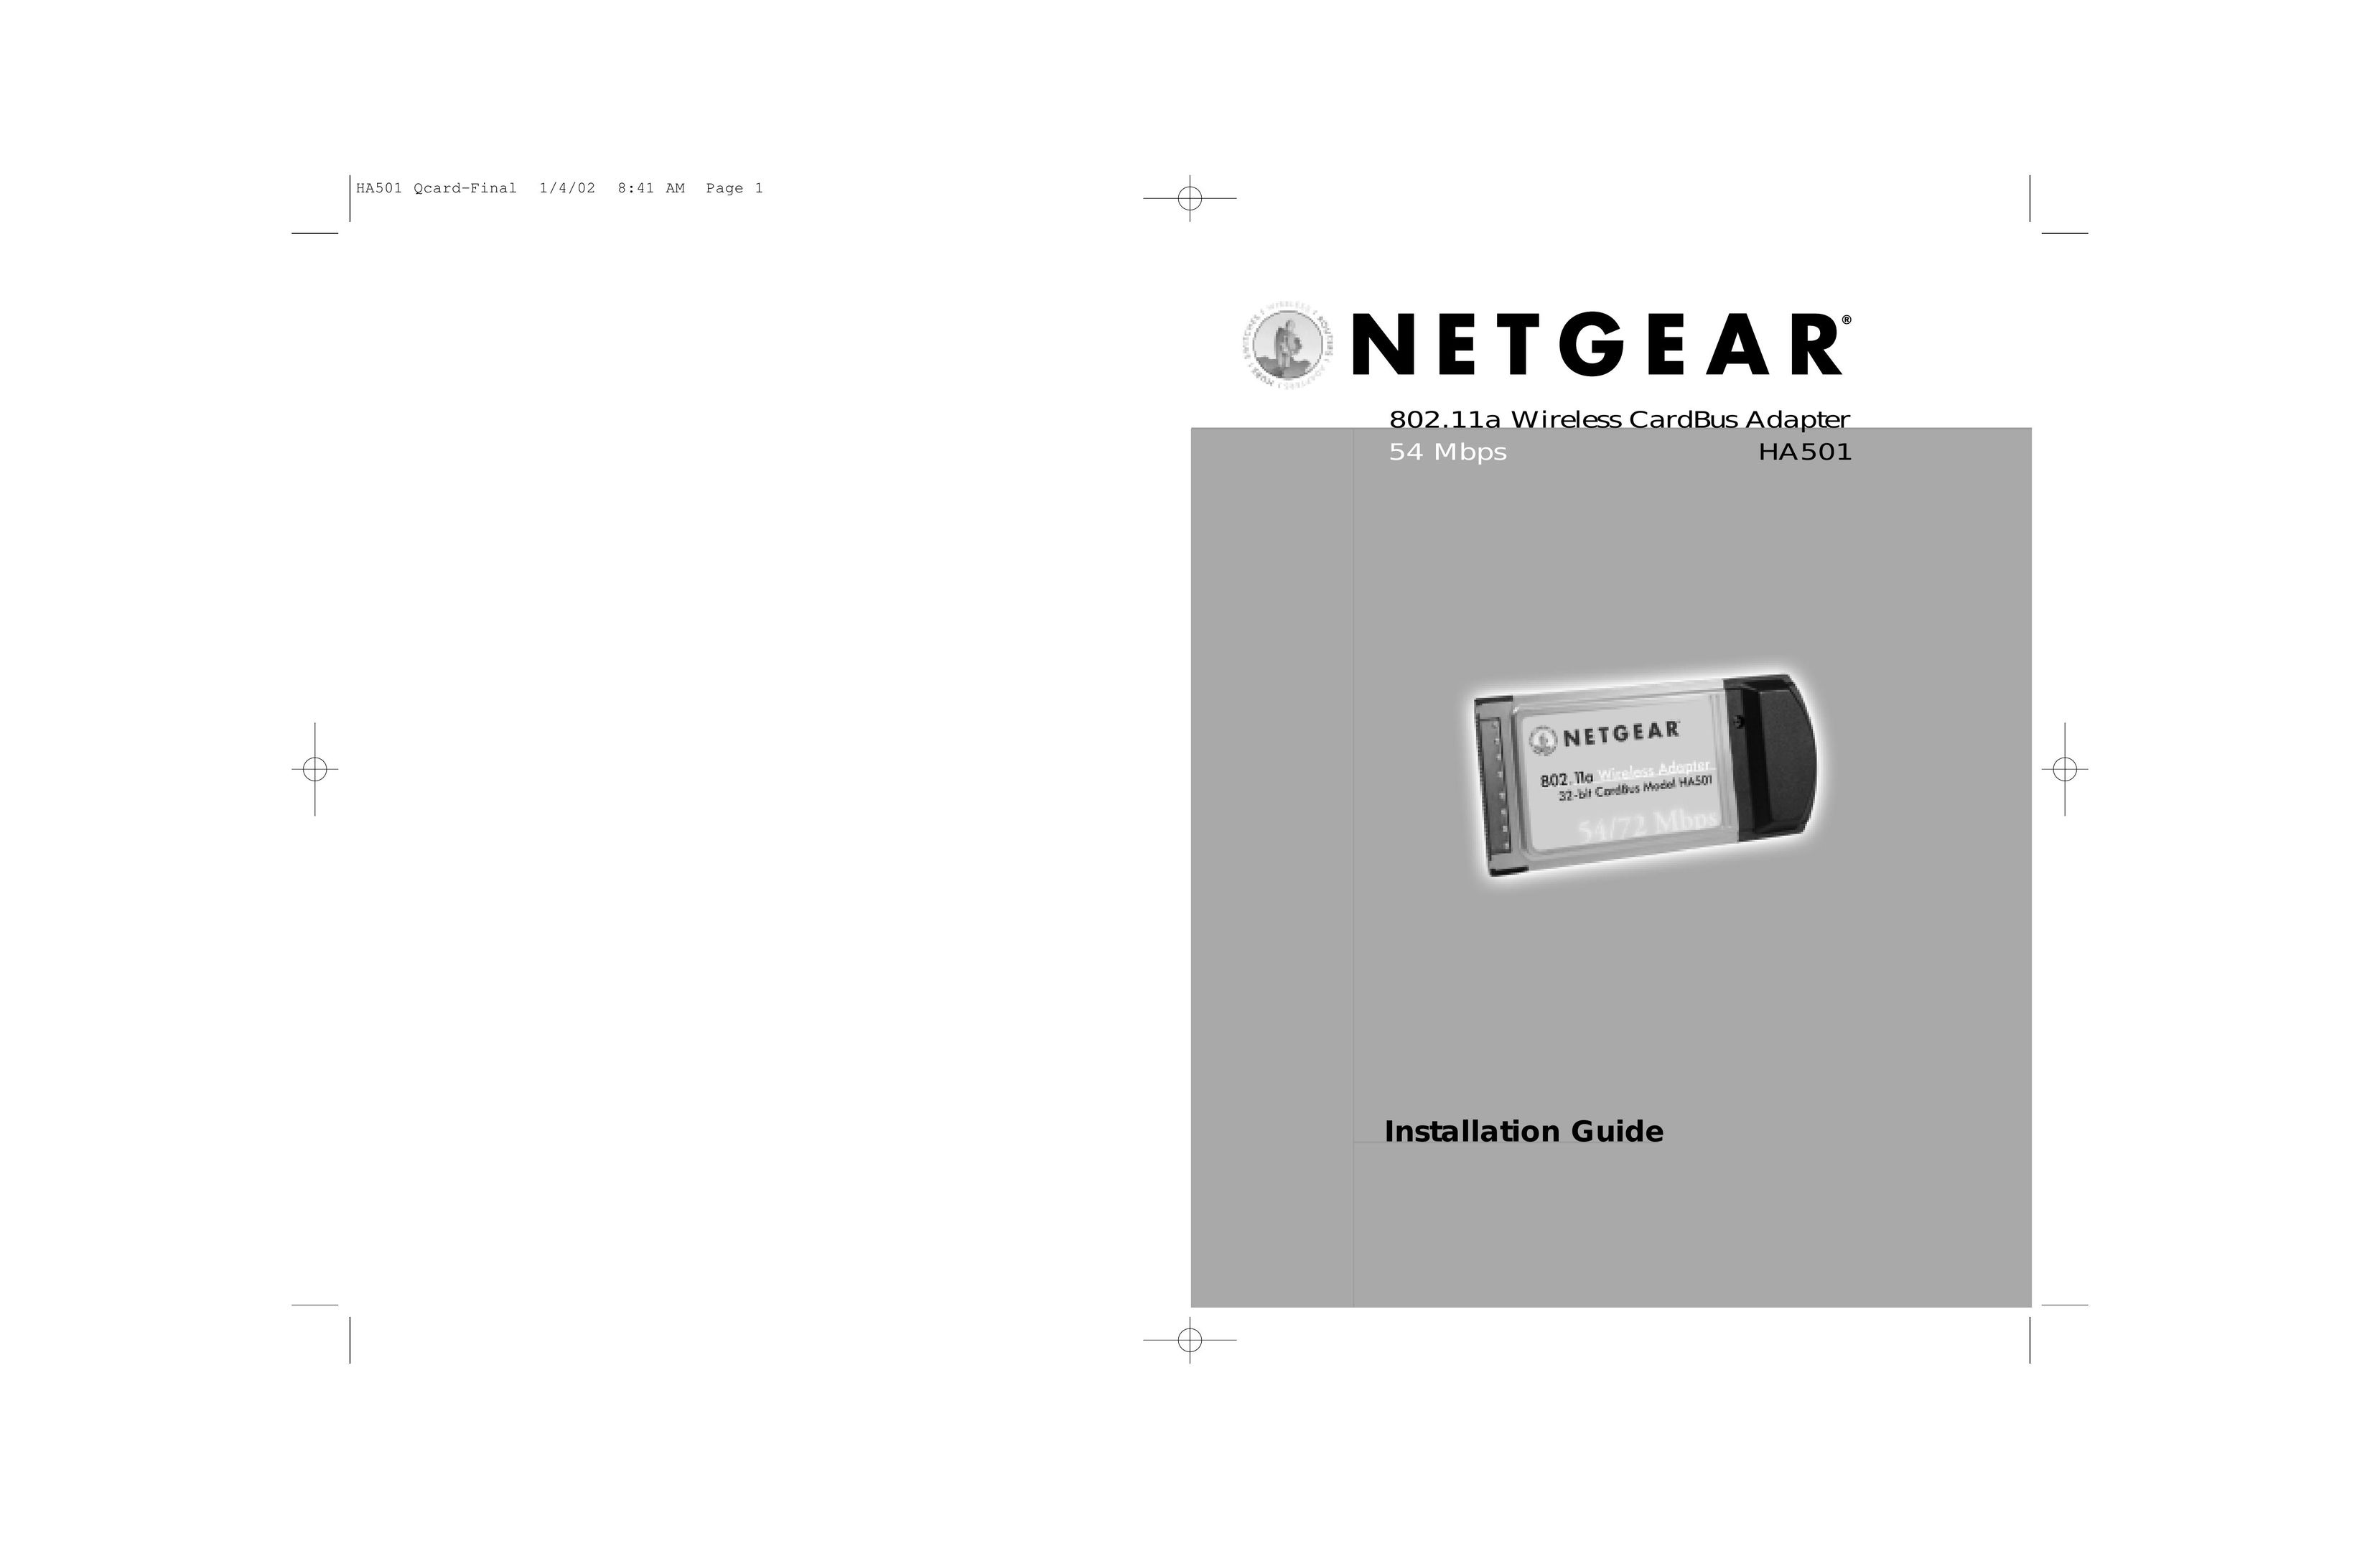 NETGEAR HA501 Network Card User Manual